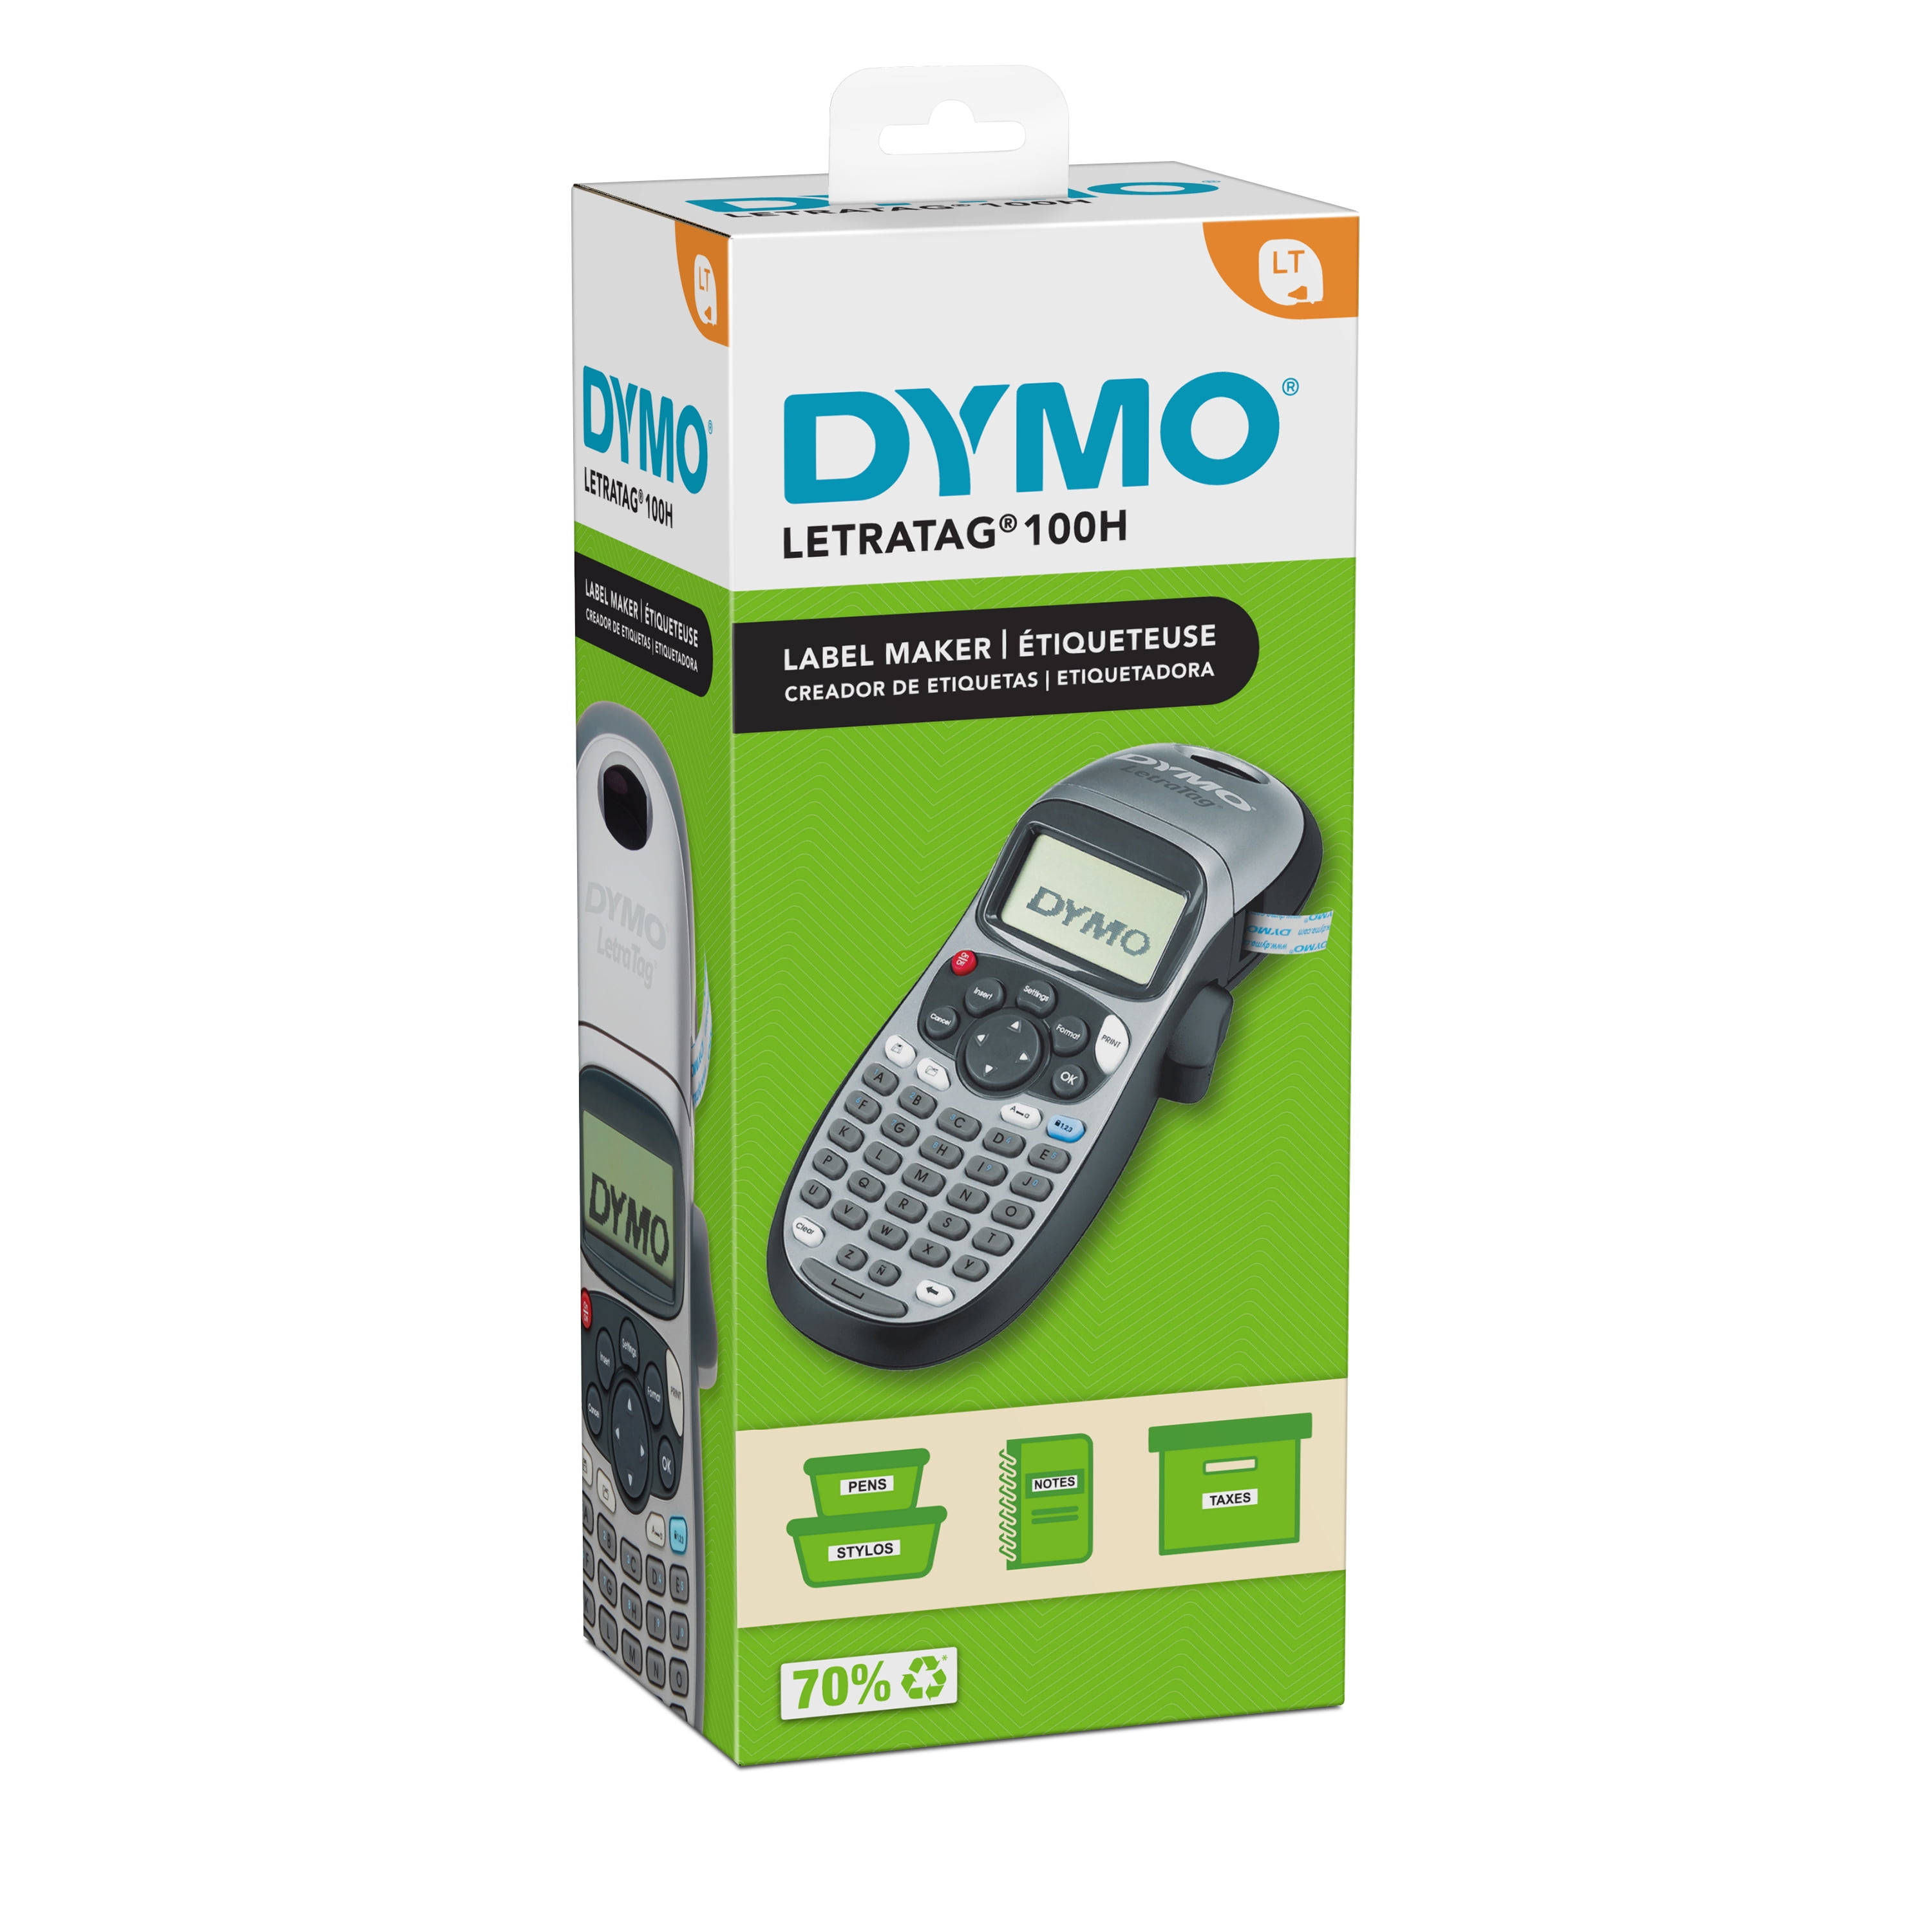 DYMO LetraTag 200B Label Maker Review 